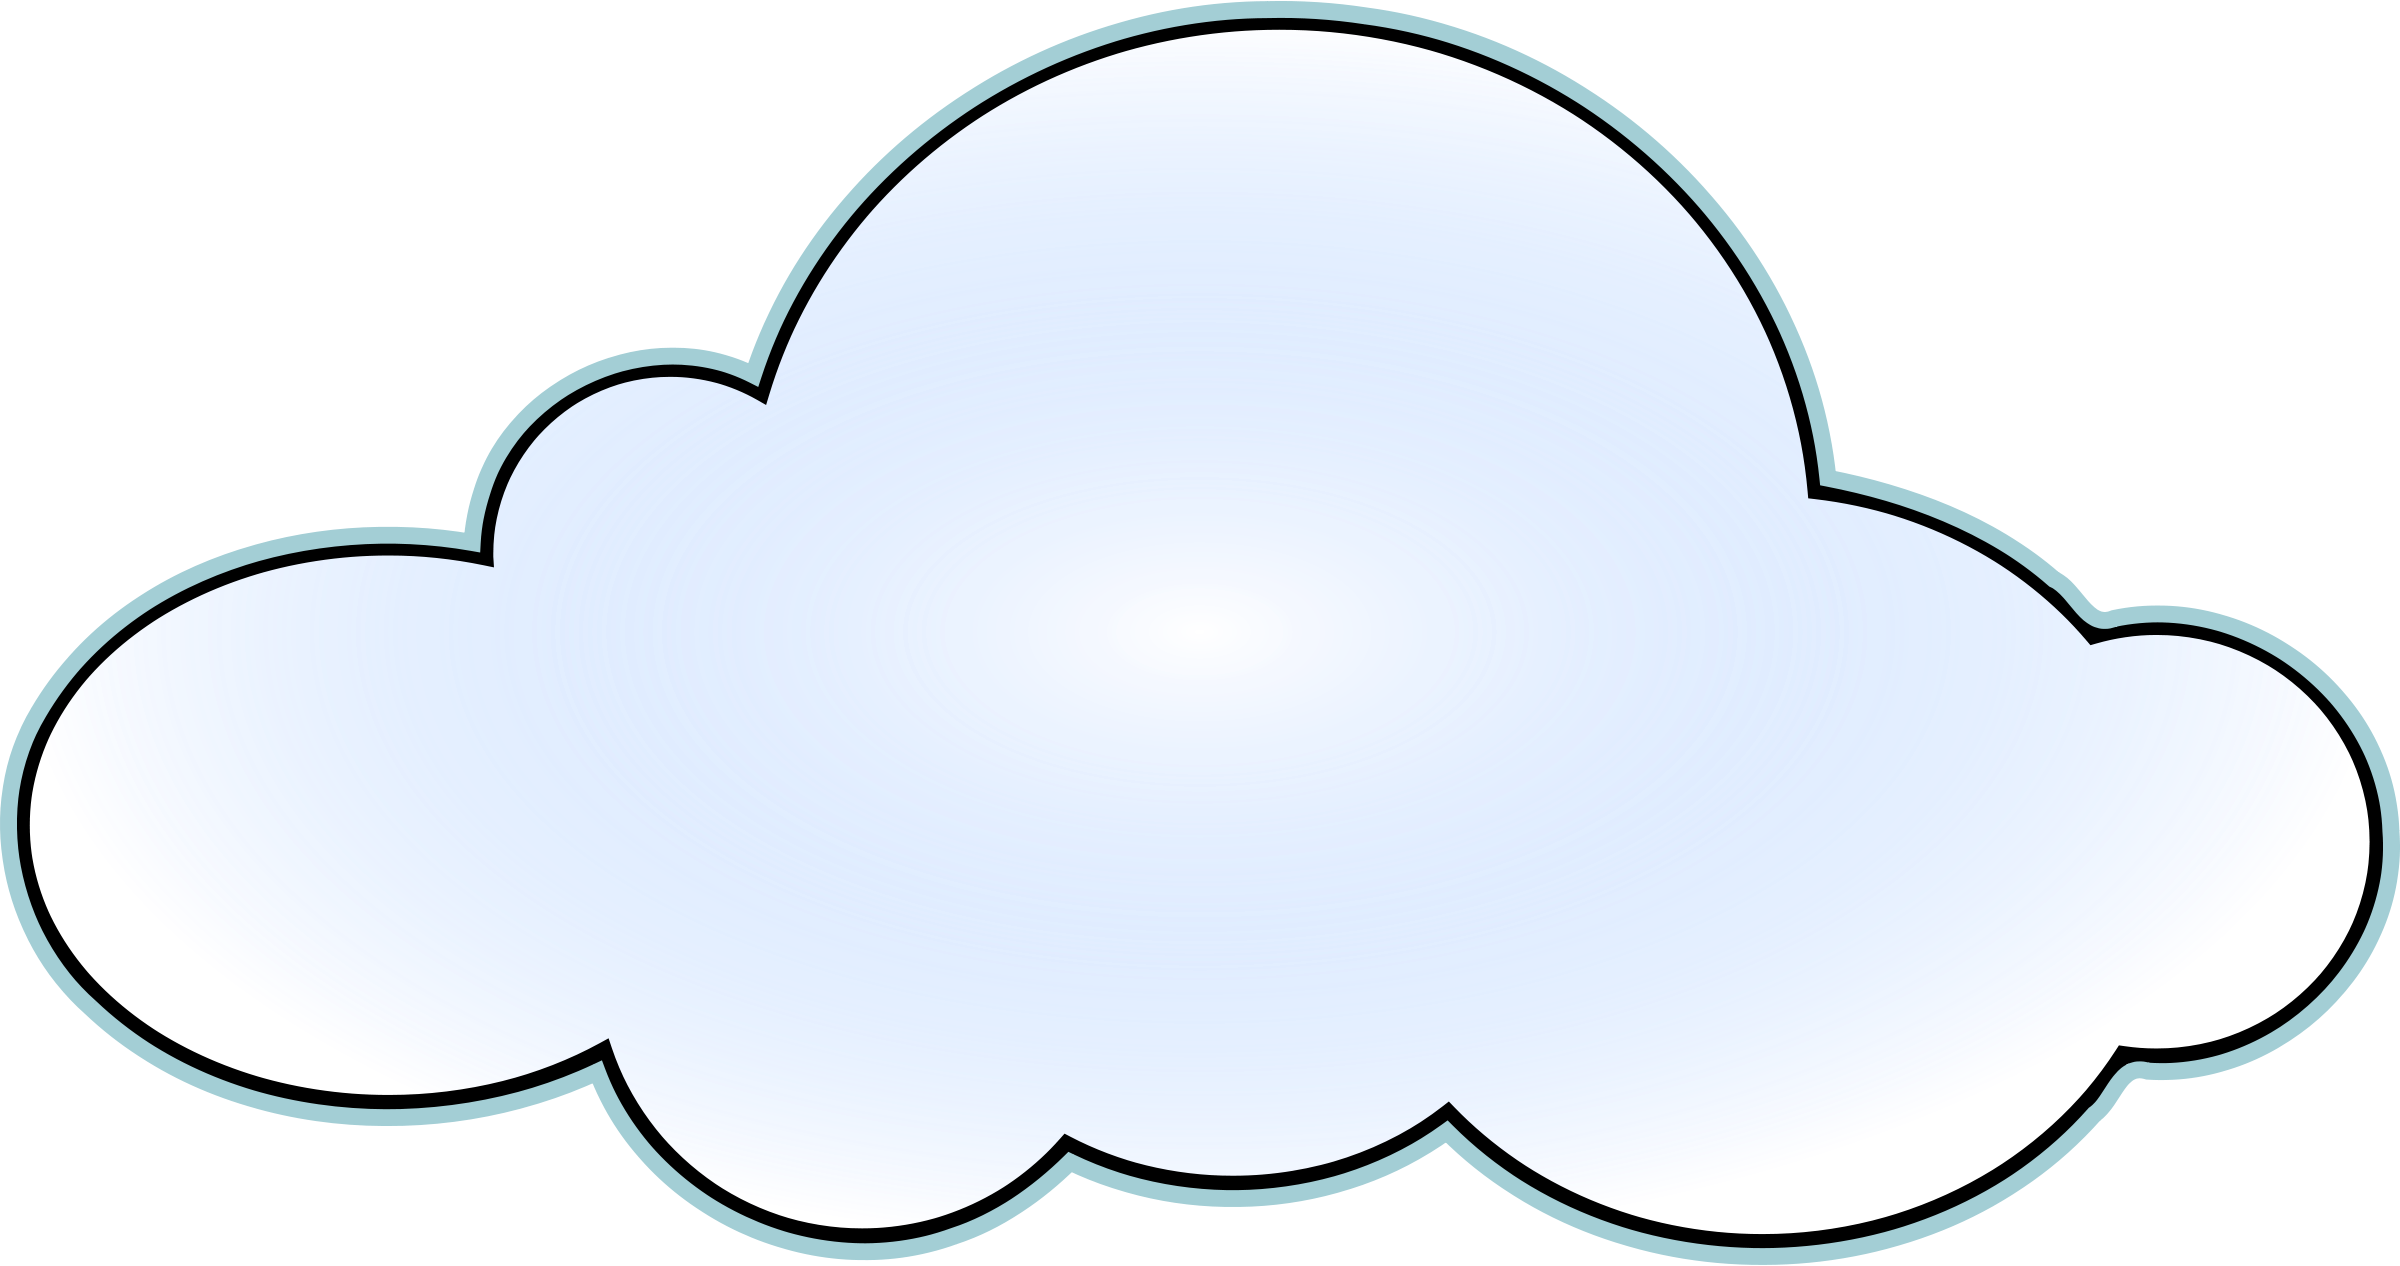 Cloud clipart cute rain cloud wikiclipart